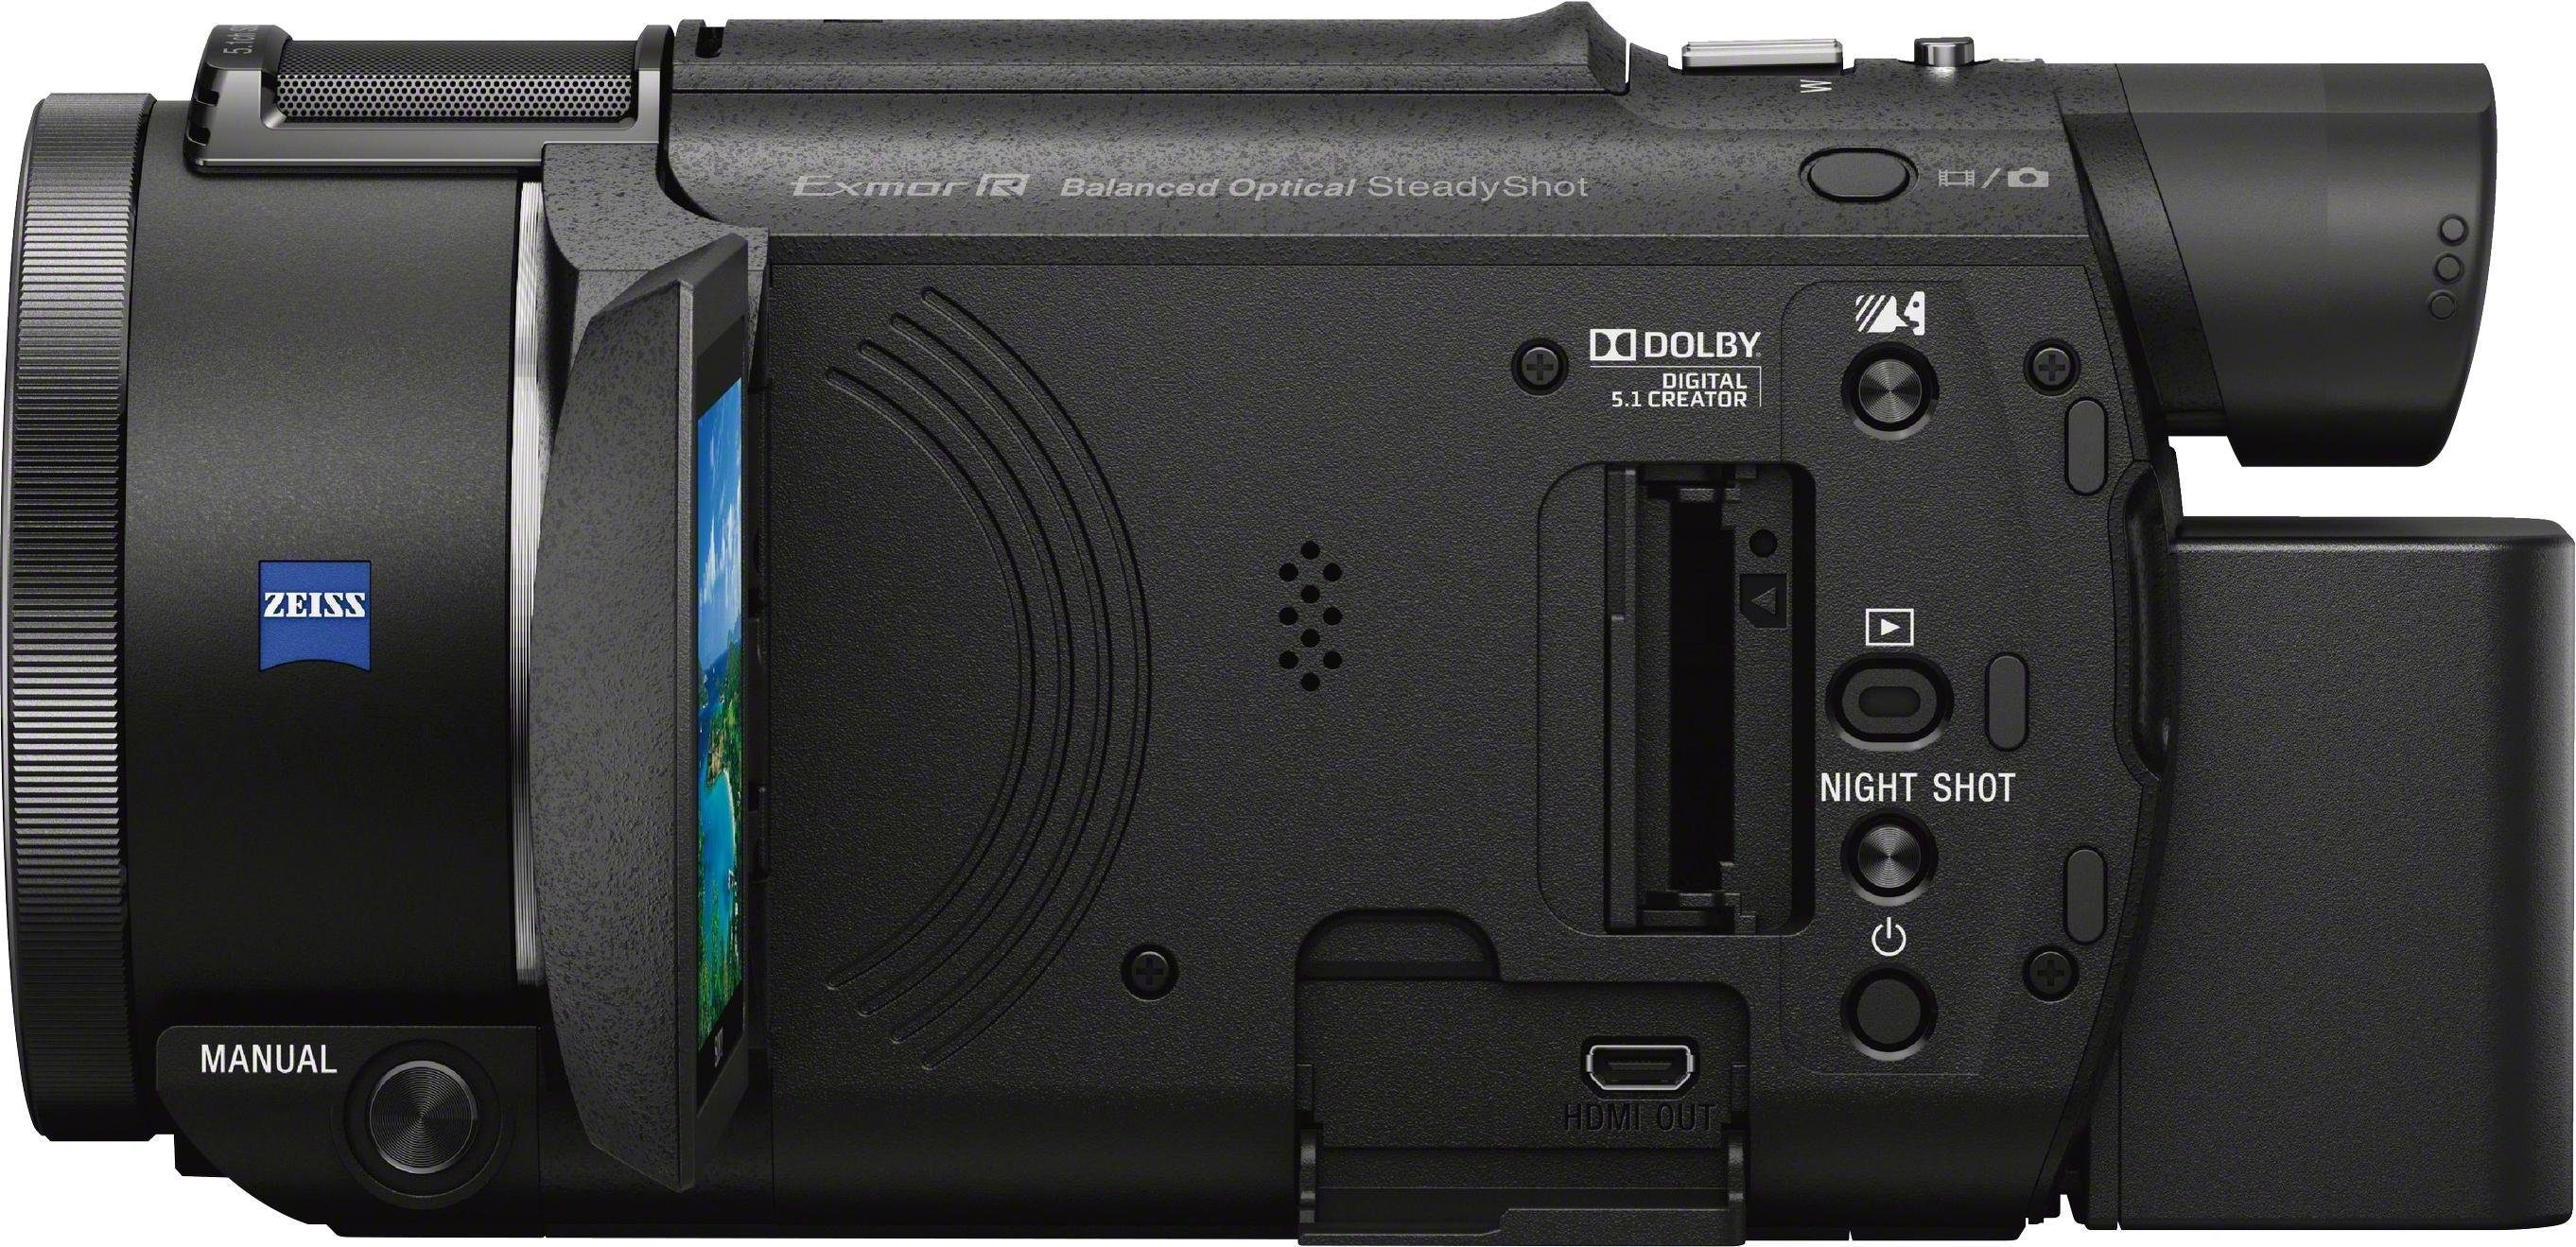 Camcorder HD, opt. 20x Sony (4K NFC, (Wi-Fi), Ultra FDRAX53.CEN WLAN Zoom)